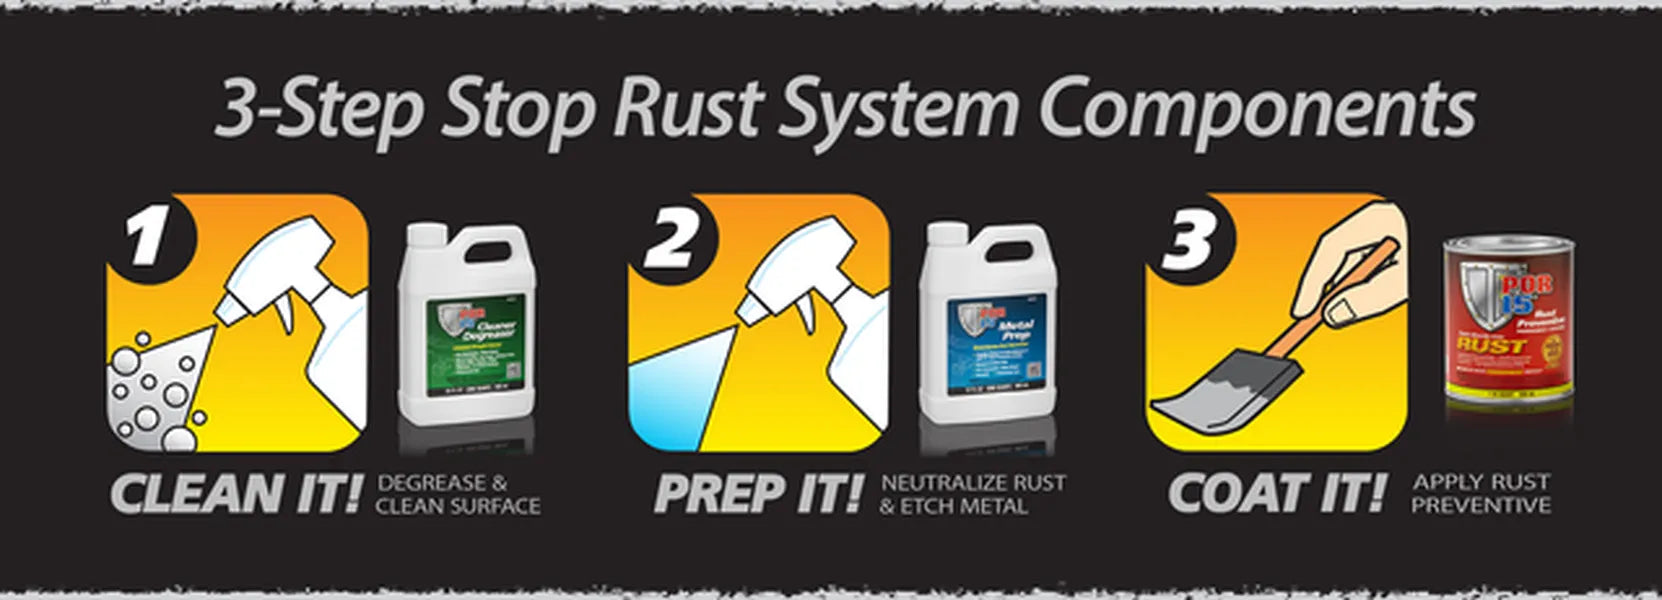 Stop Rust System. Clean It, Prep It, Coat It !